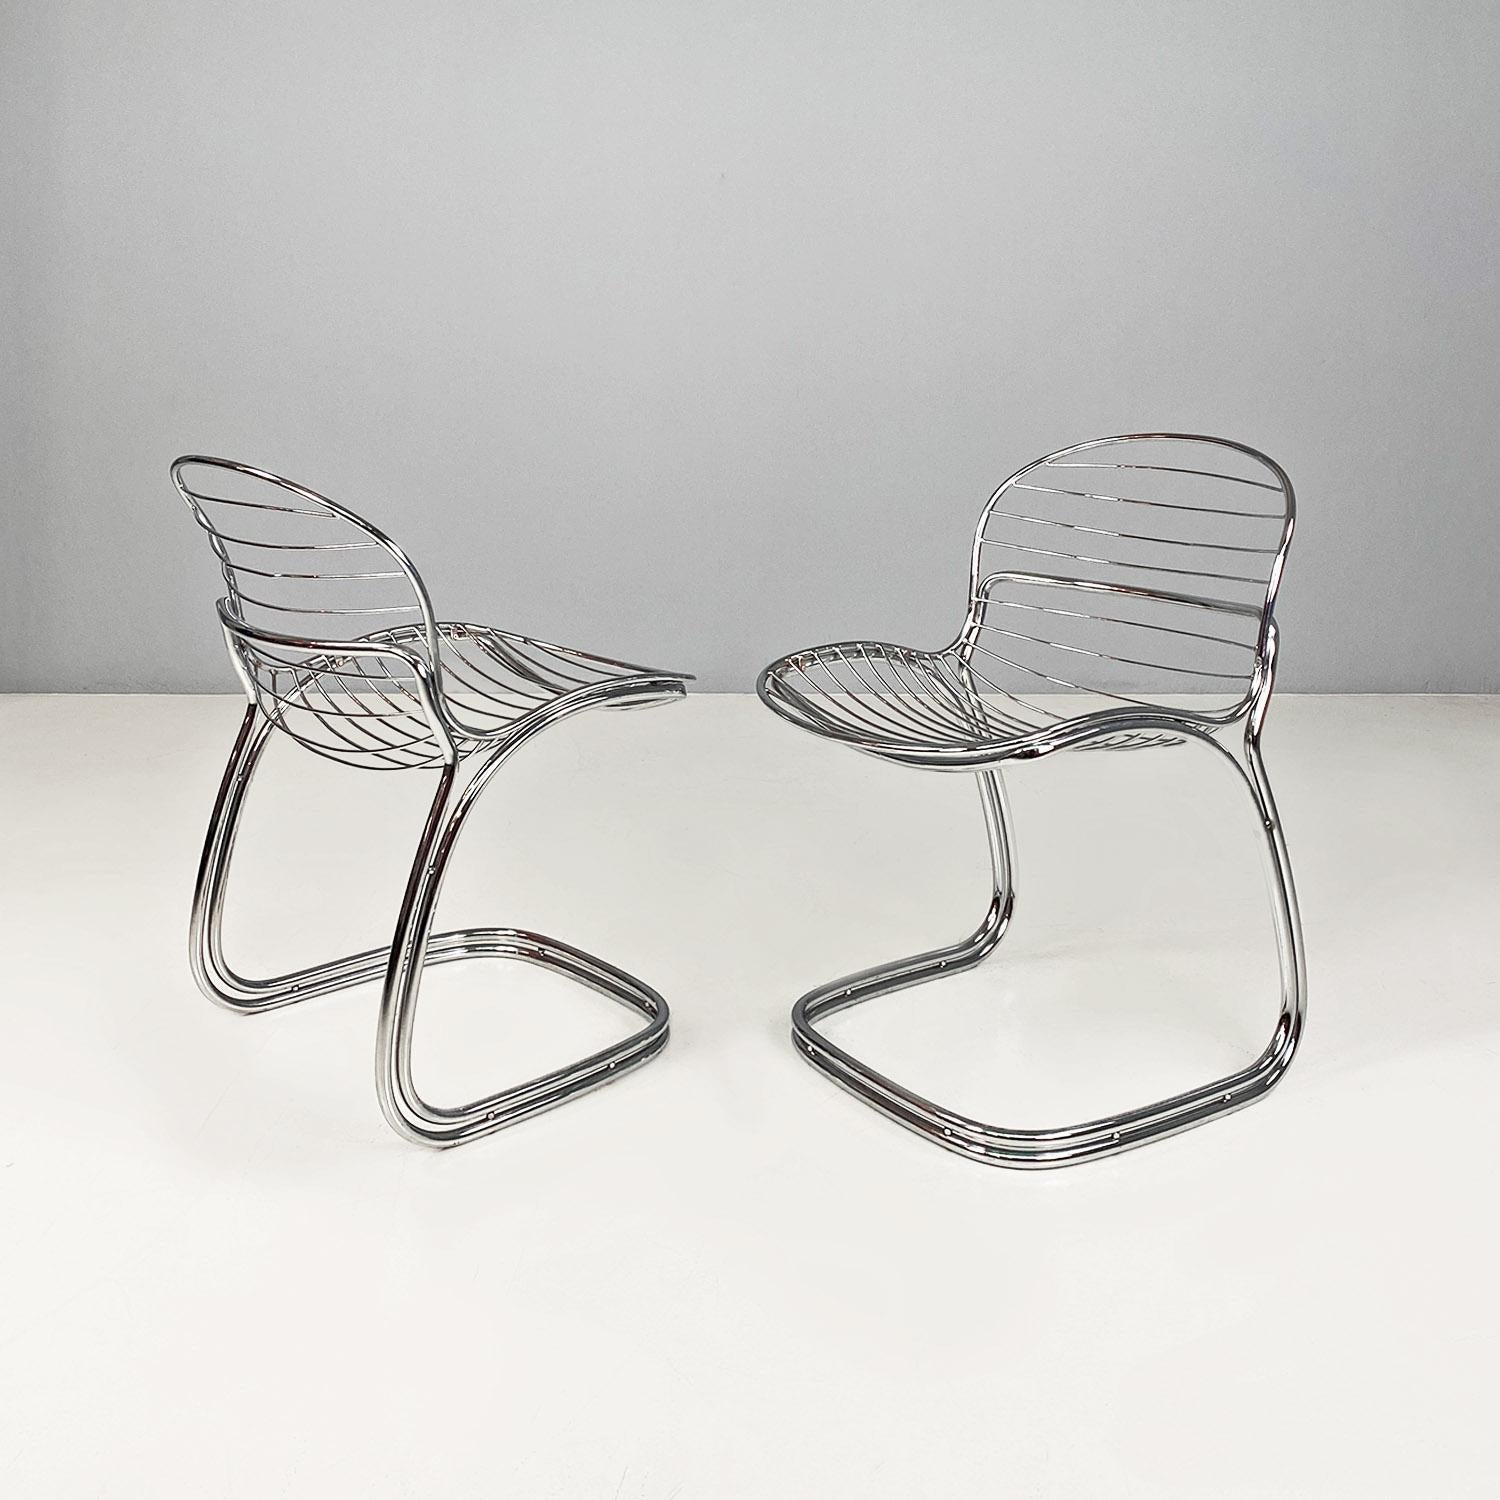 Modern Italian modern chromed steel Sabrina chairs by Gastone Rinaldi for Rima, 1970s For Sale